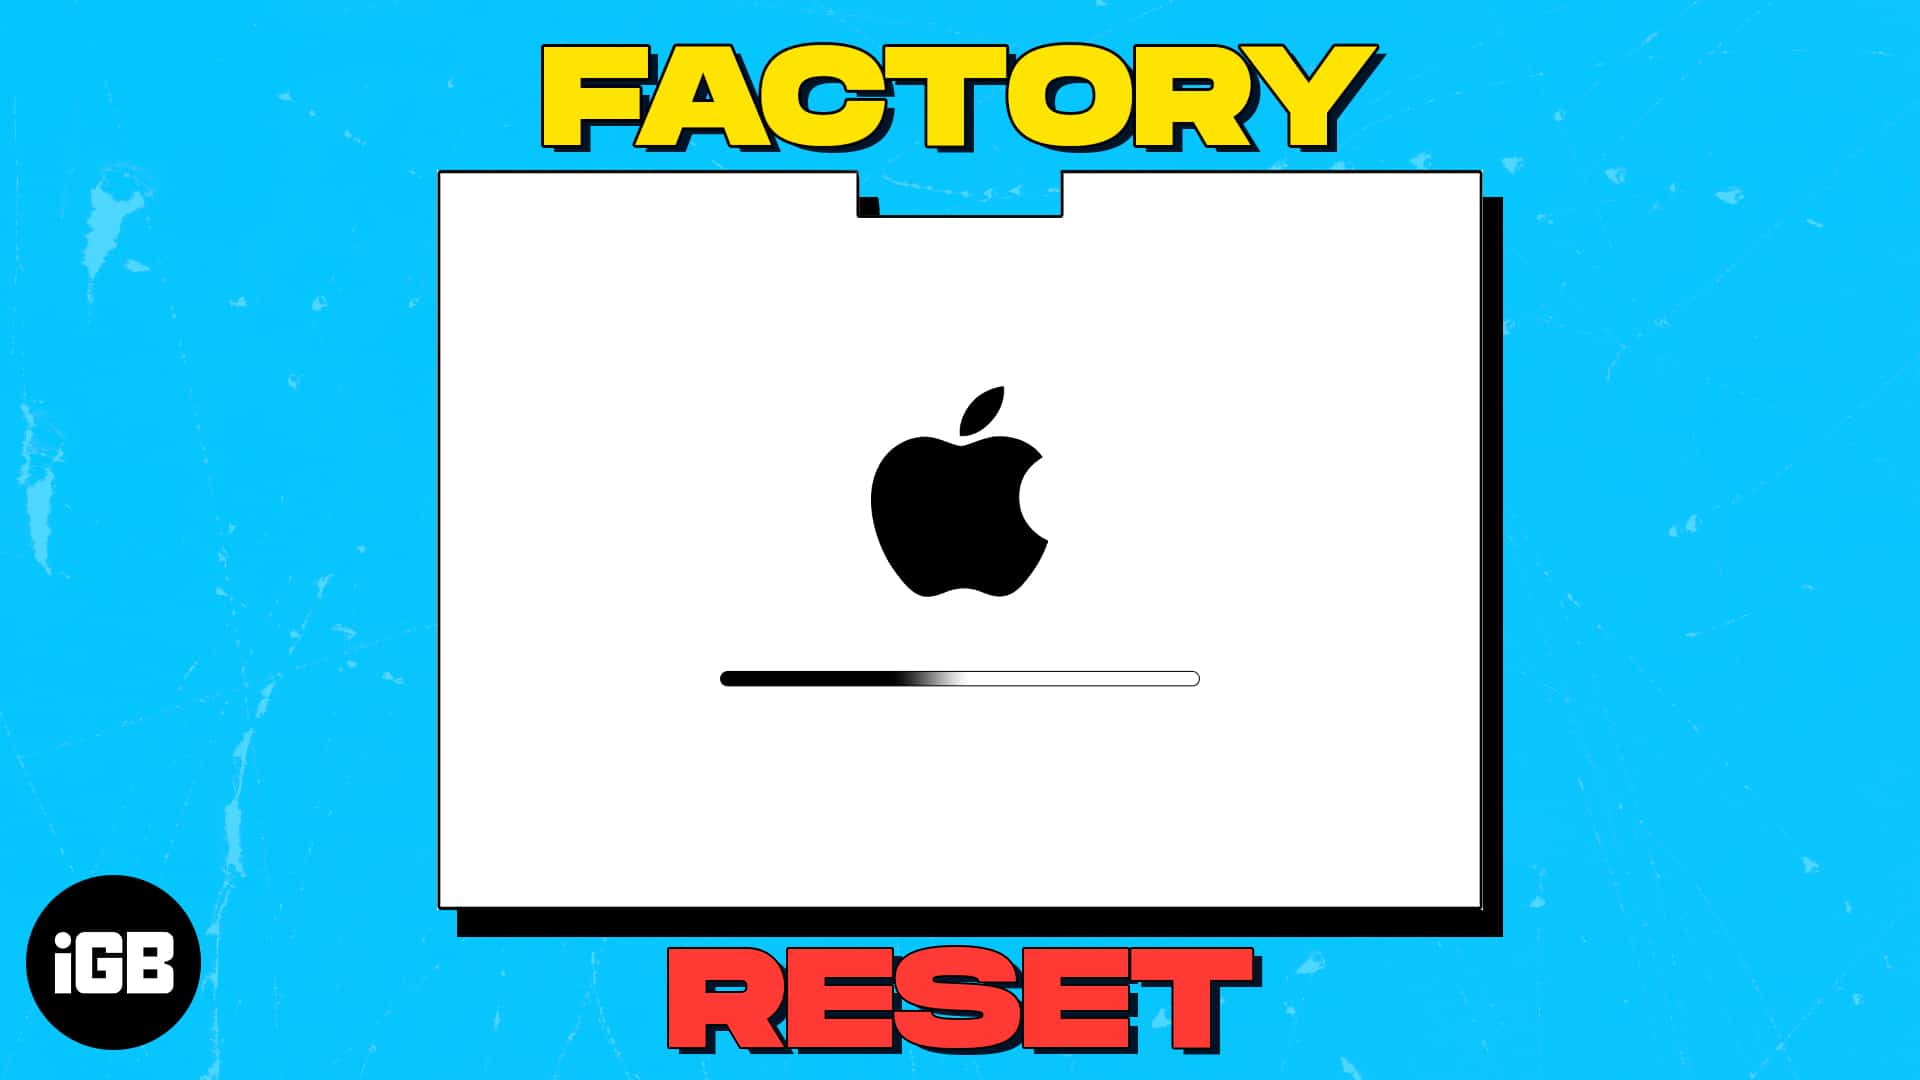 How to factory reset MacBook or Mac